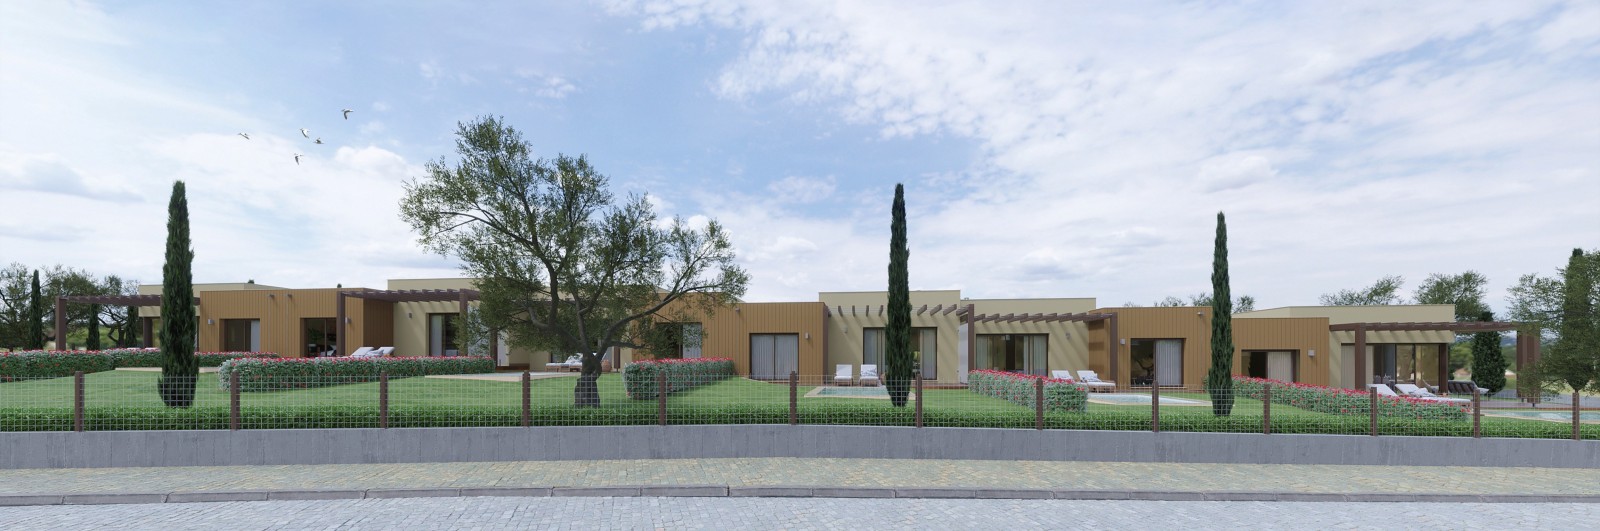 2 bedroom semi-detached villa with swimming pool for sale in Golf resort, Algarve_218815